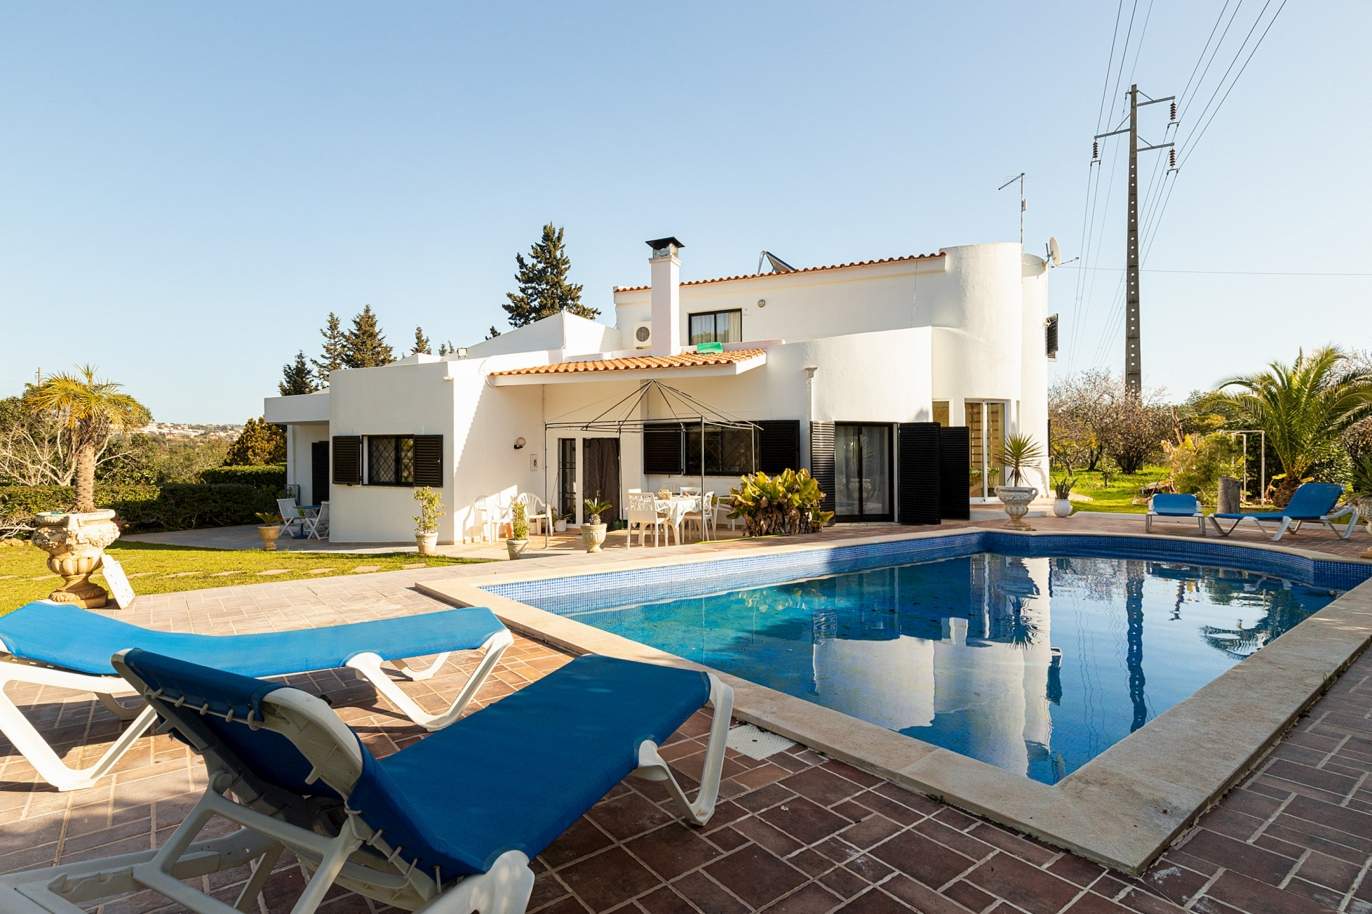 4 Bedroom Villa with swimming pool, for sale in Boliqueime - Algarve_192007